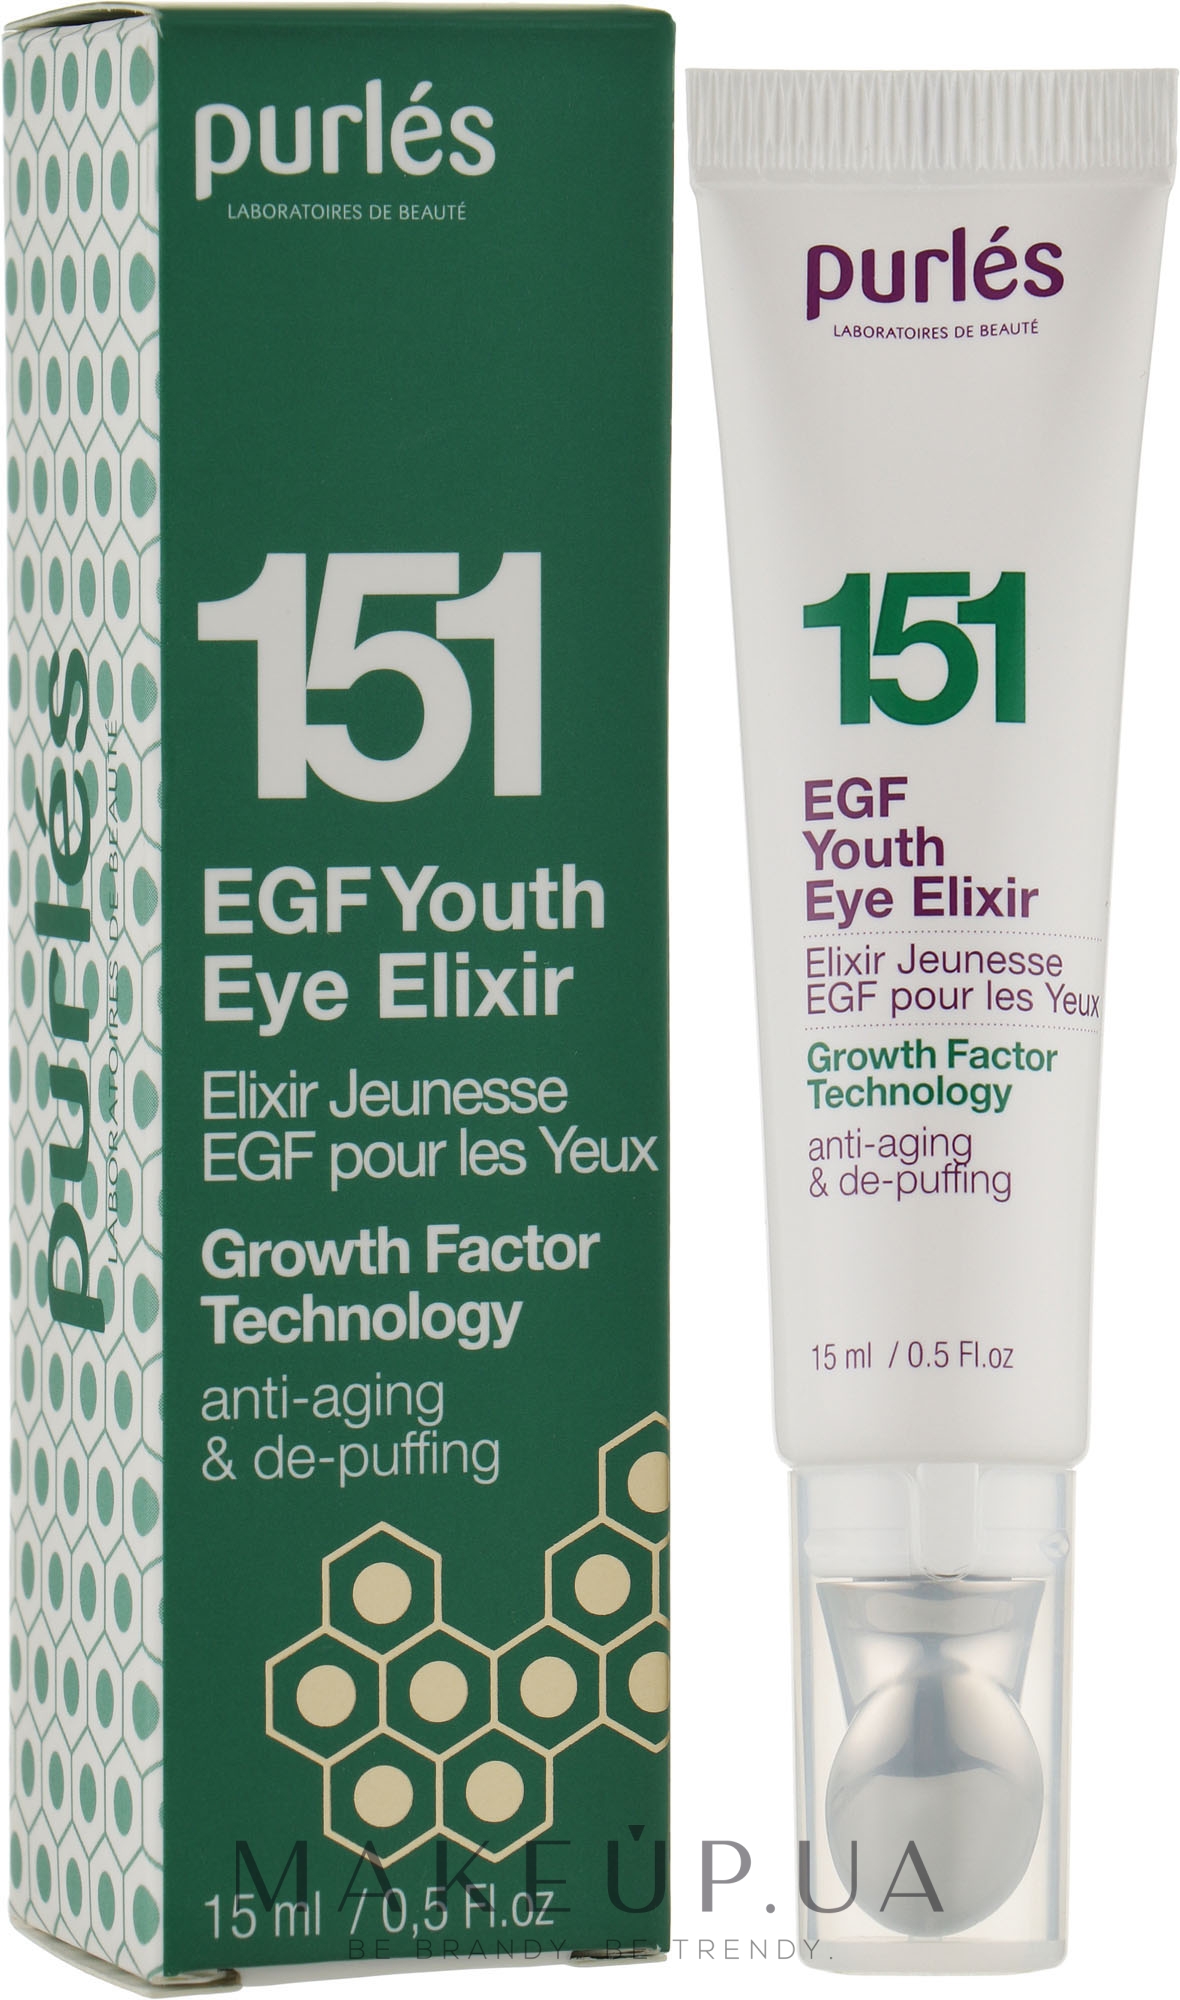 Еліксир молодості для очей - Purles Growth Factor Technology 151 Youth Eye Elixir — фото 15ml